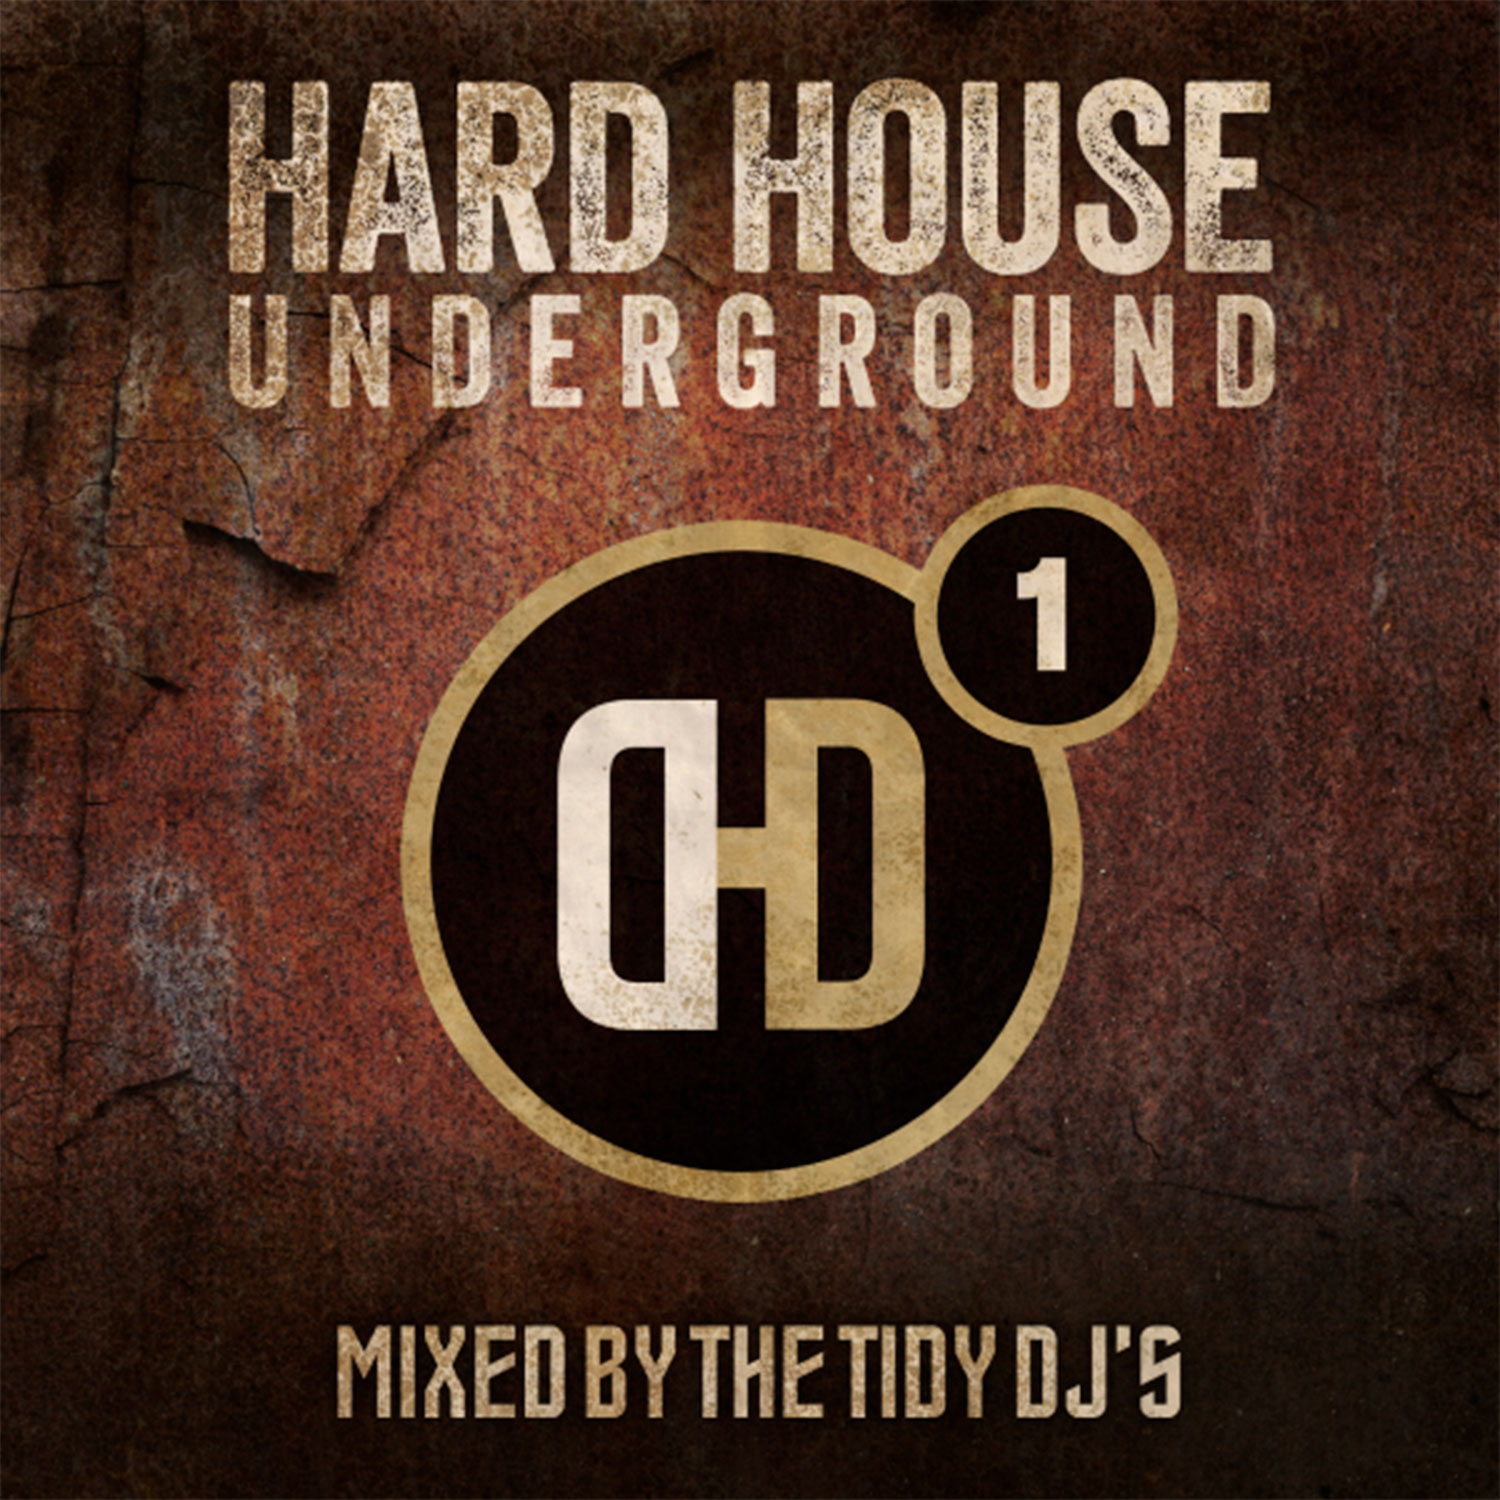 Hard House Underground